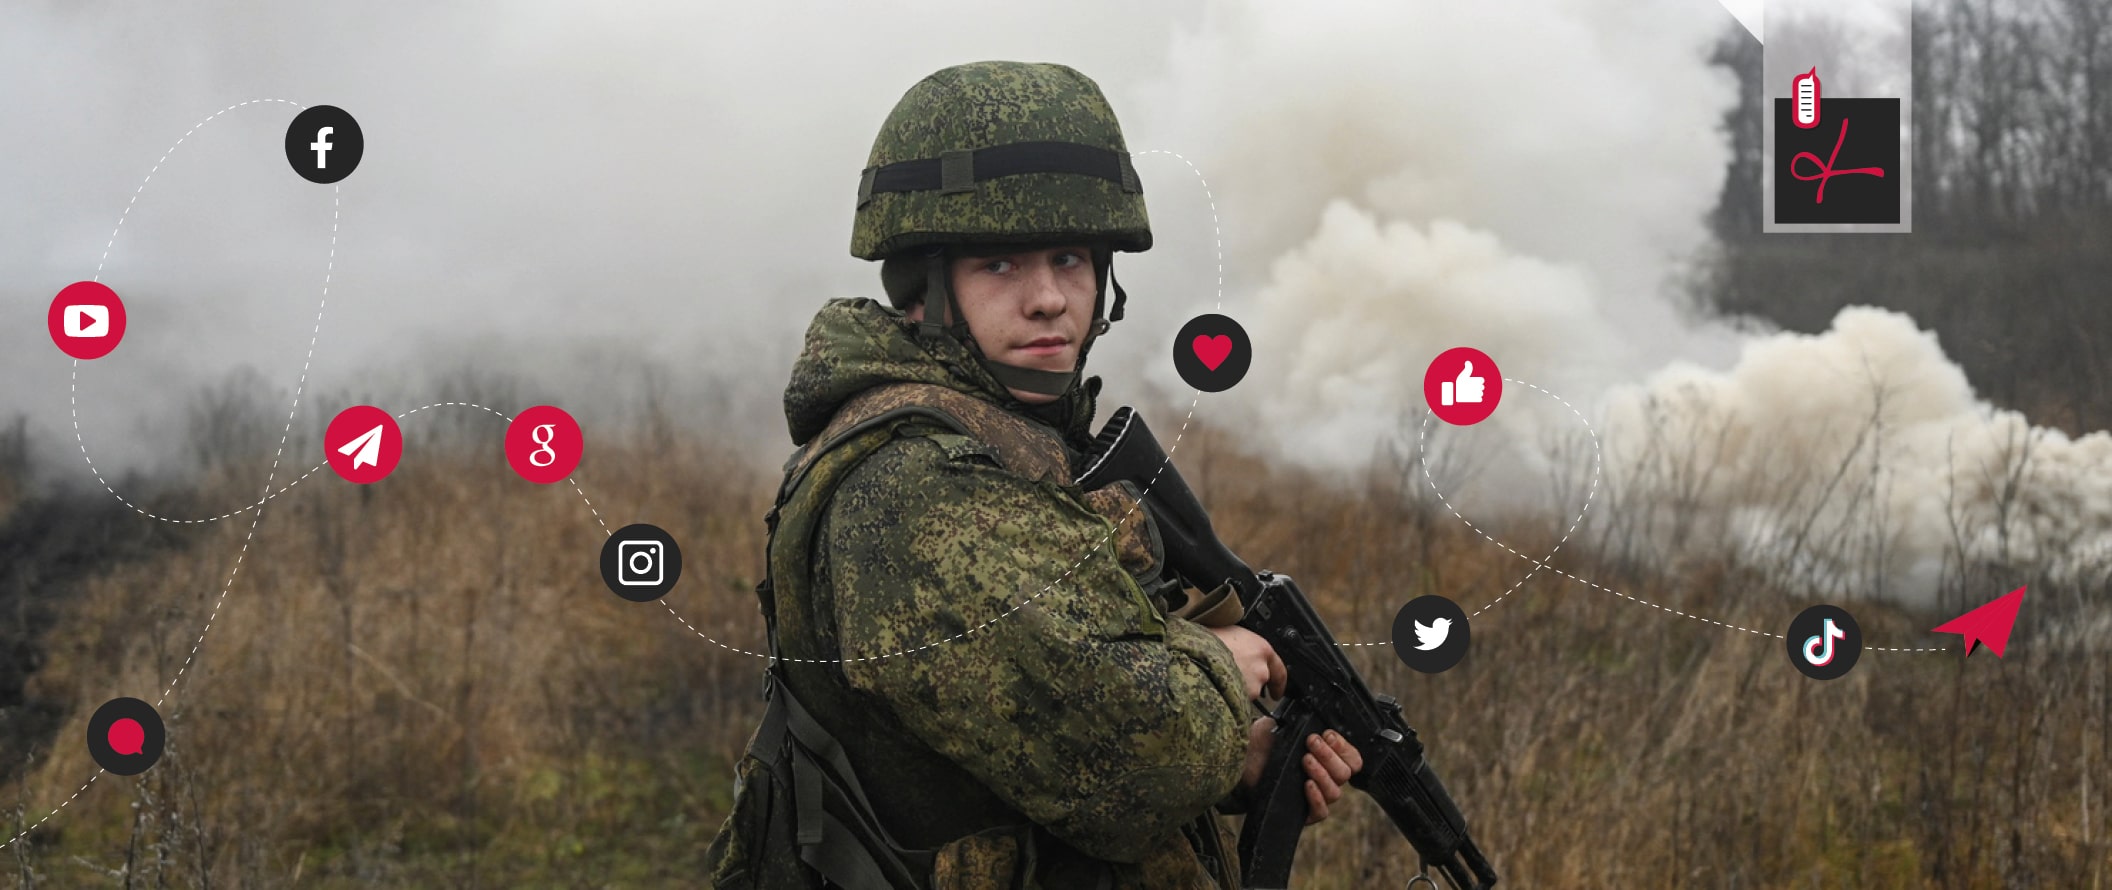 La guerra in Ucraina: i social sono entrati in partita